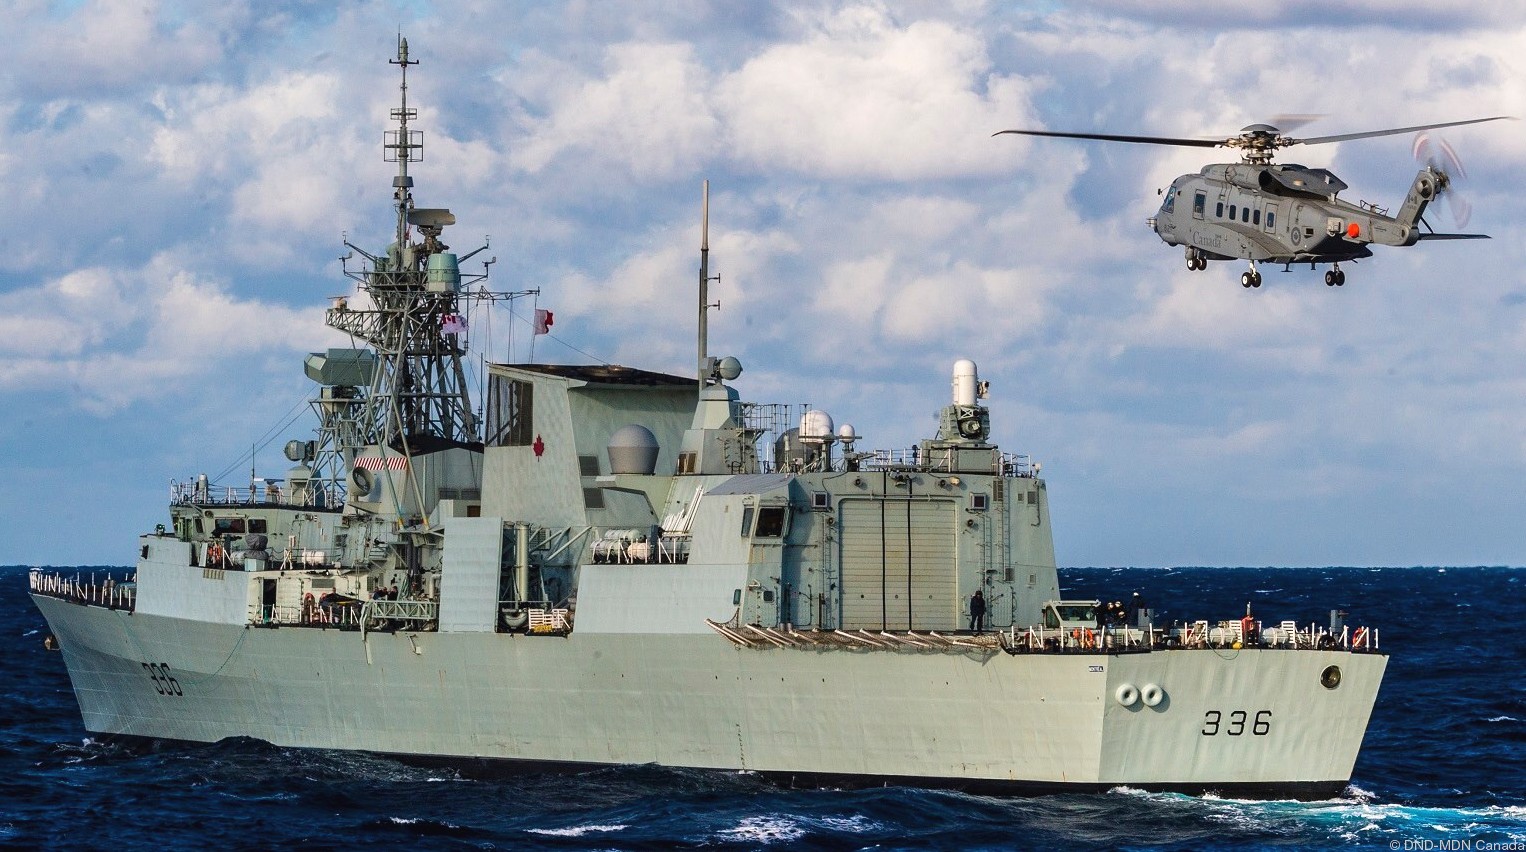 ffh-336 hmcs montreal halifax class helicopter patrol frigate ncsm royal canadian navy 07x saint john shipbuilding